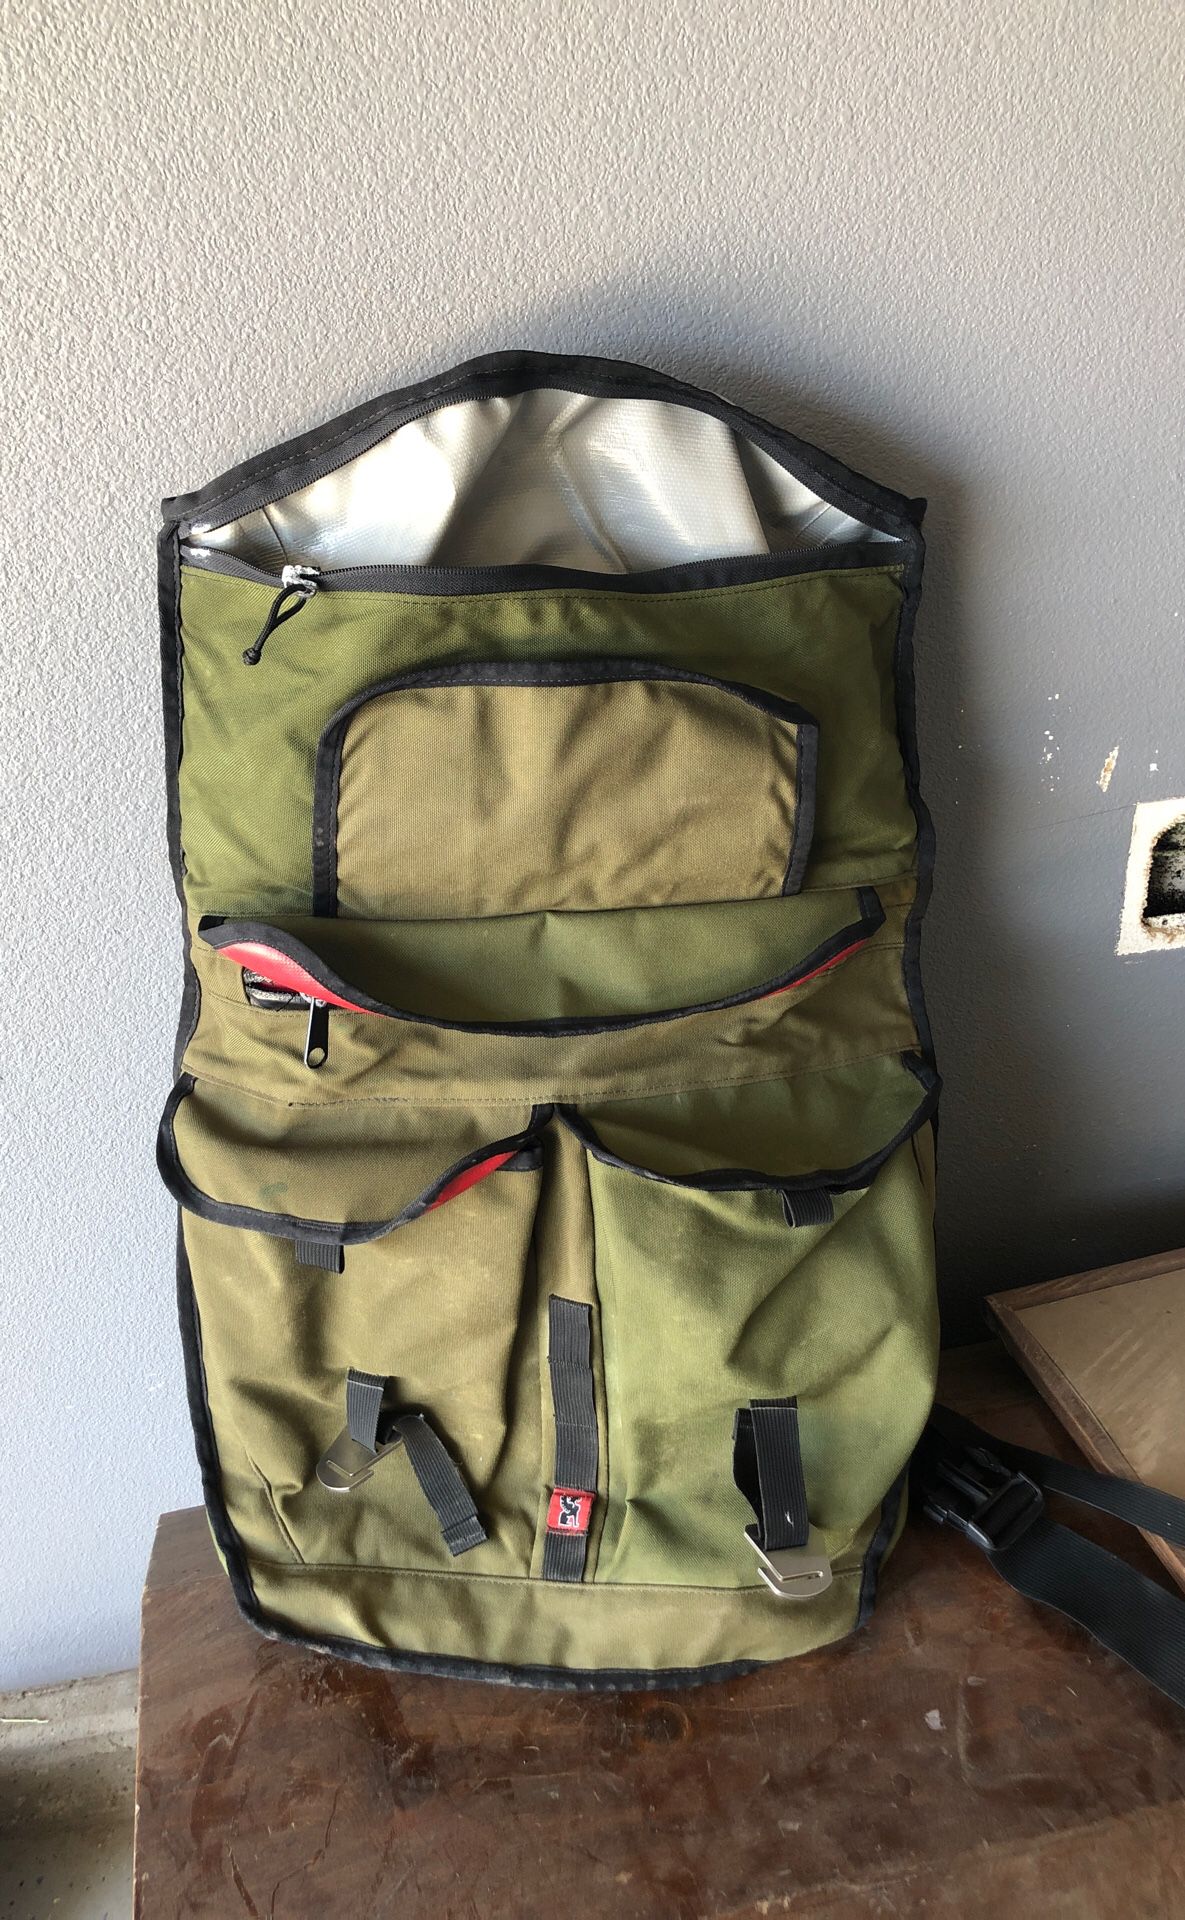 Chrome backpack - waterproof- (used)